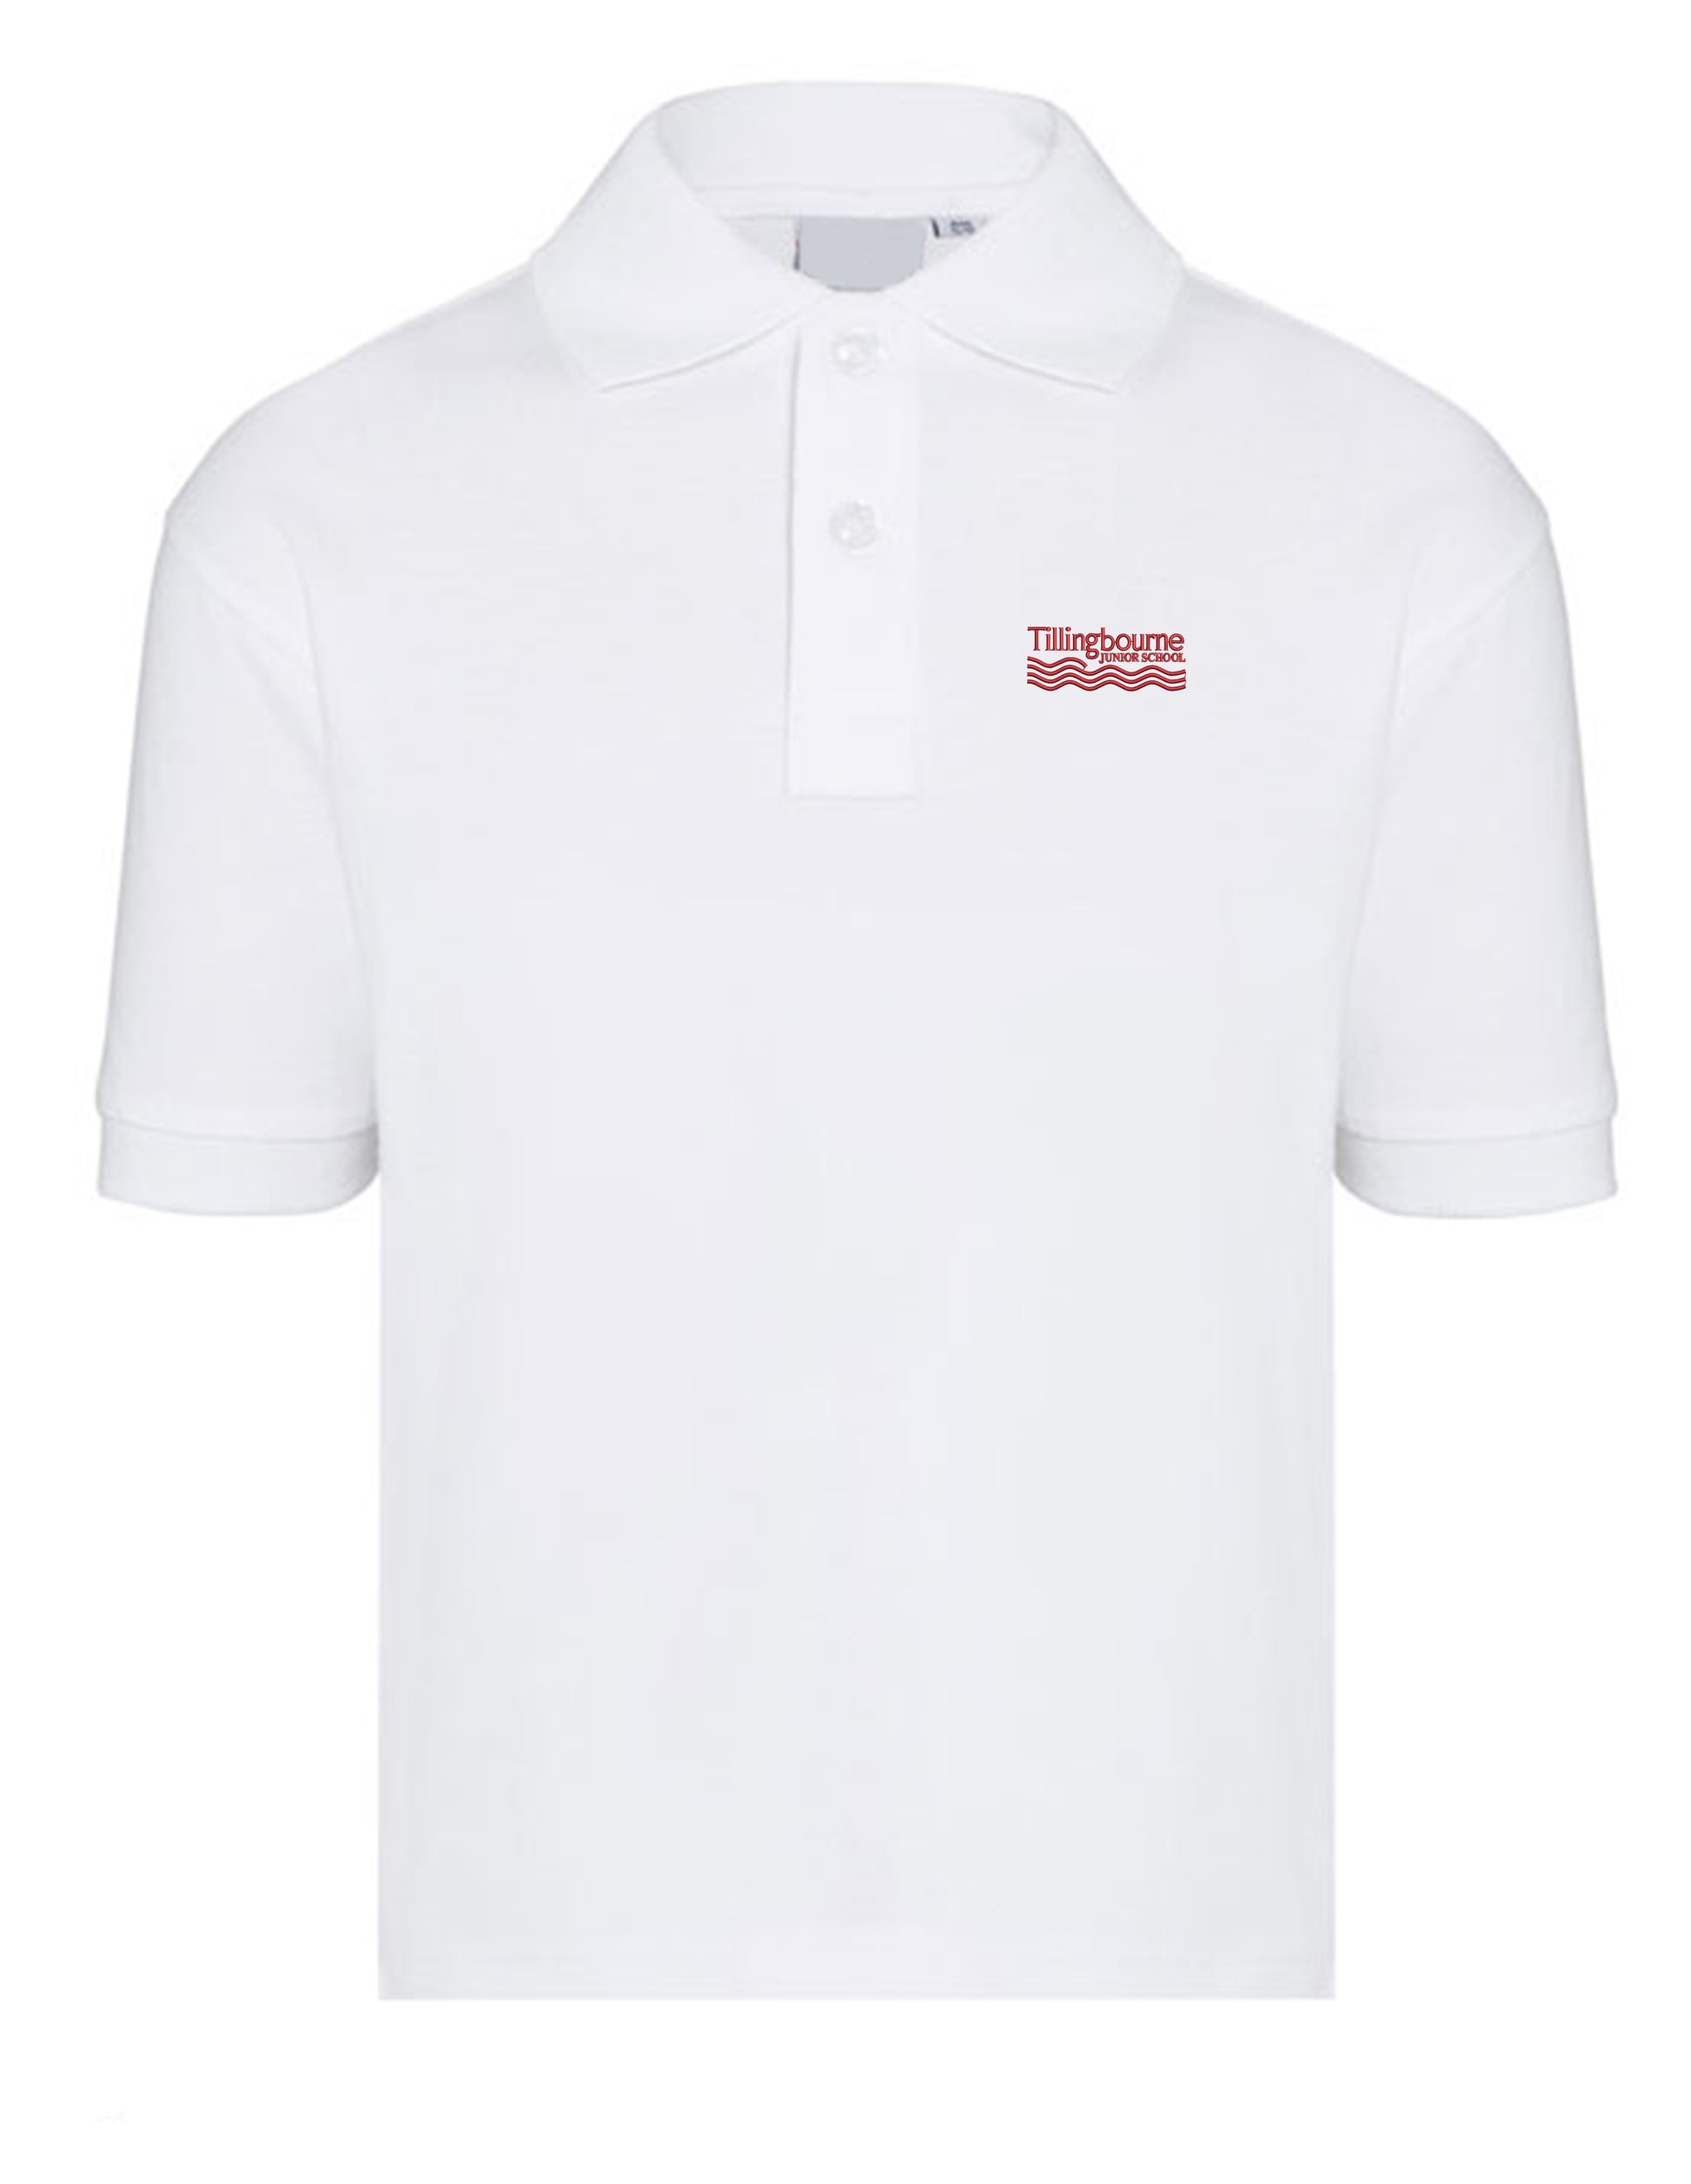 Tillingbourne Junior School - Polo Shirt - School Uniform Shop